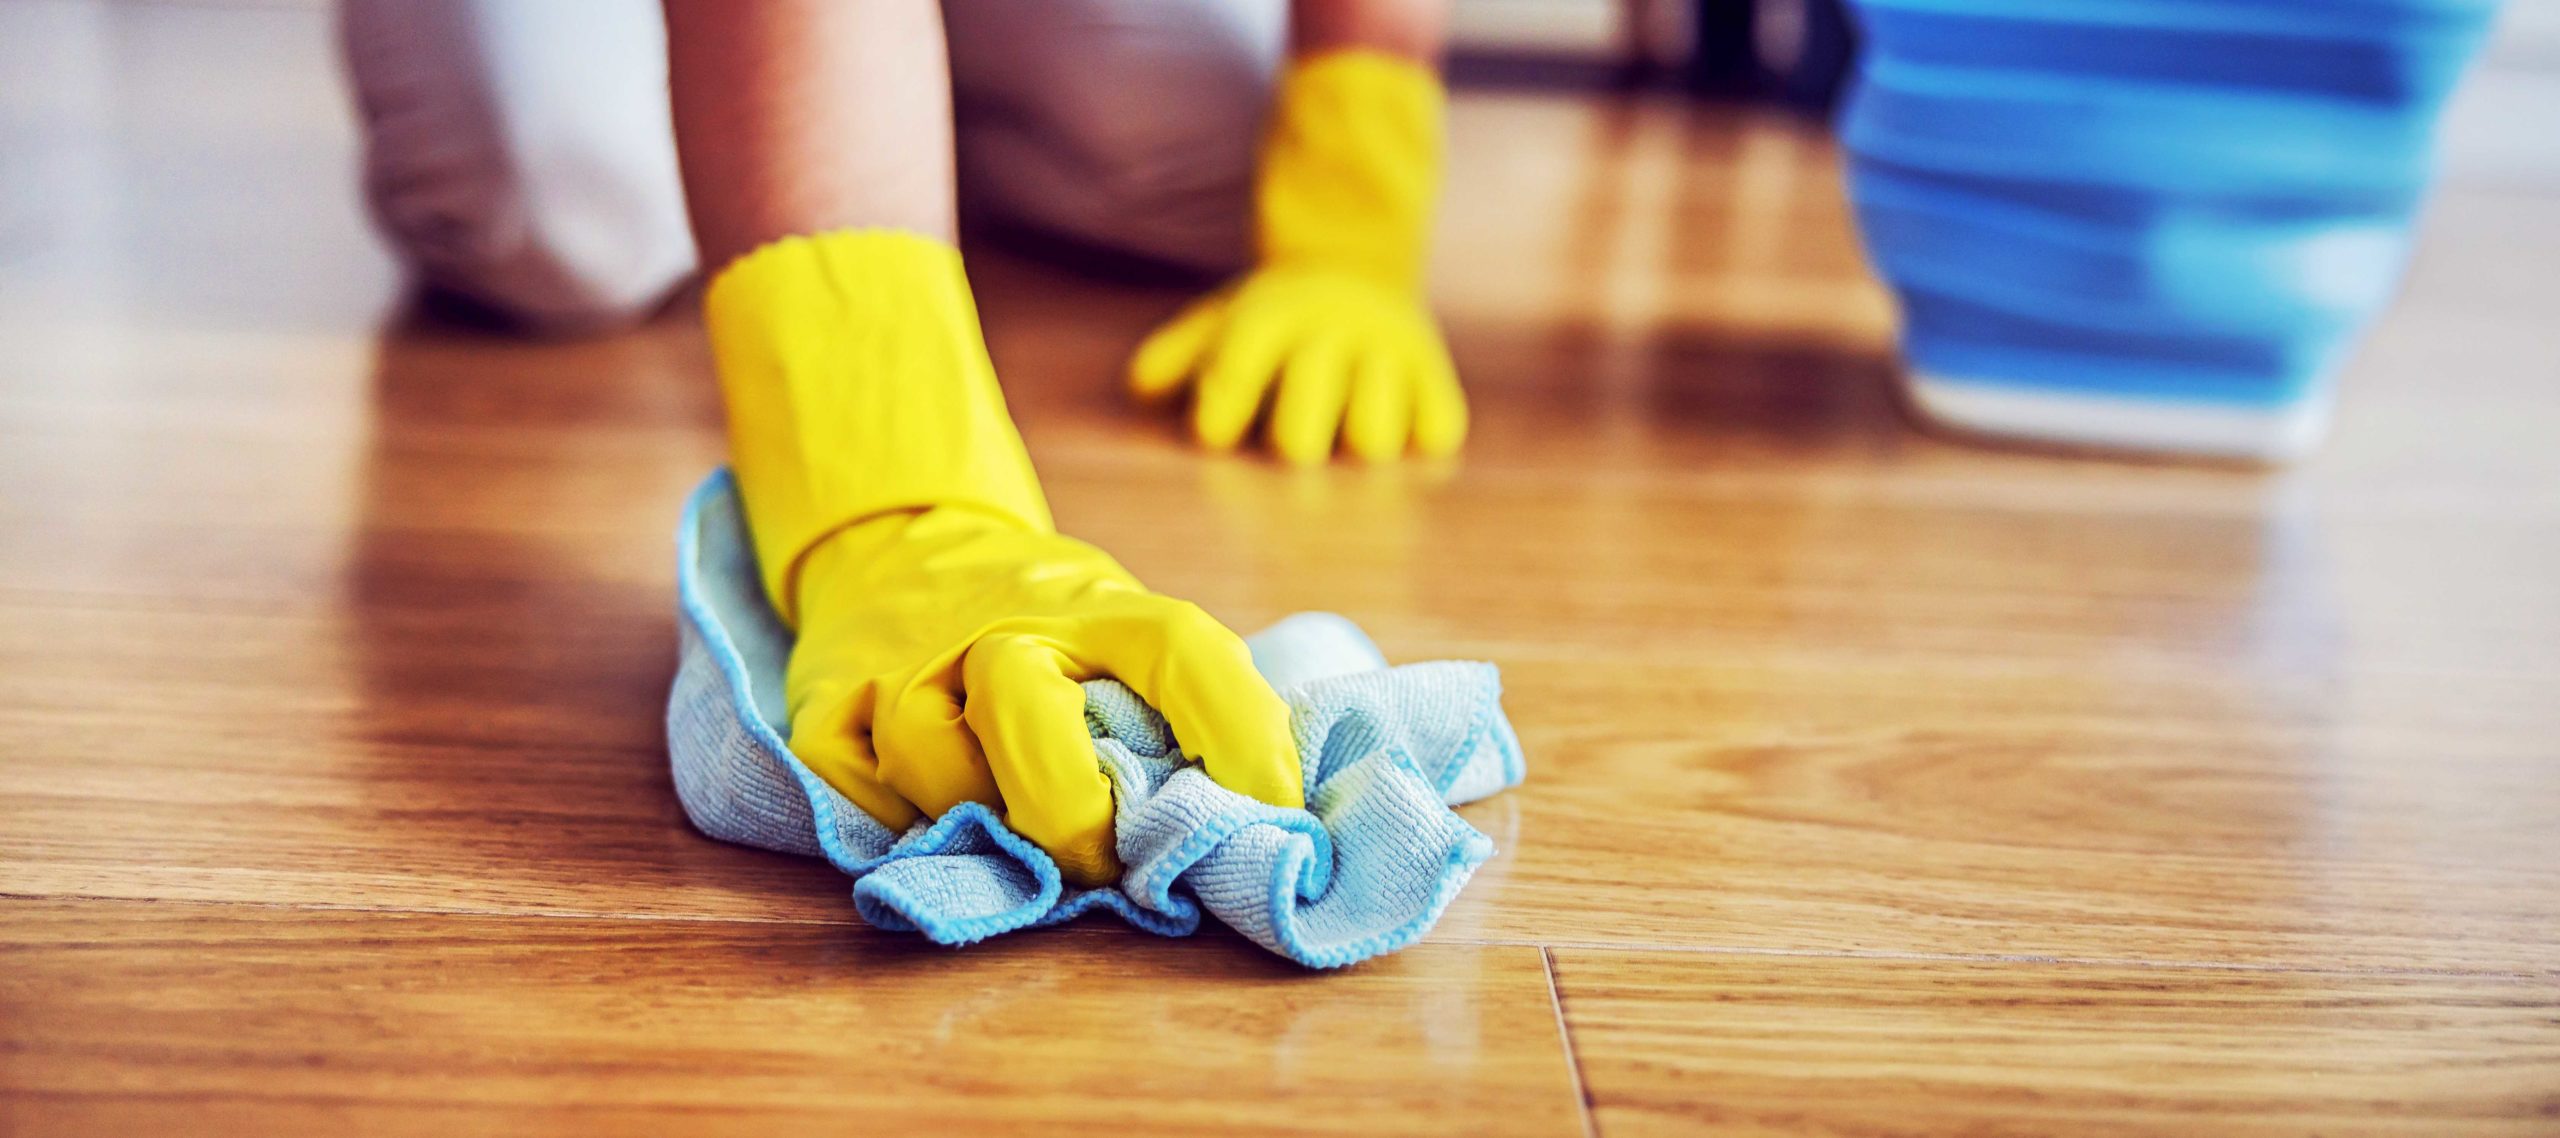 Tips For Laminate Floor Care in Springfield Missouri